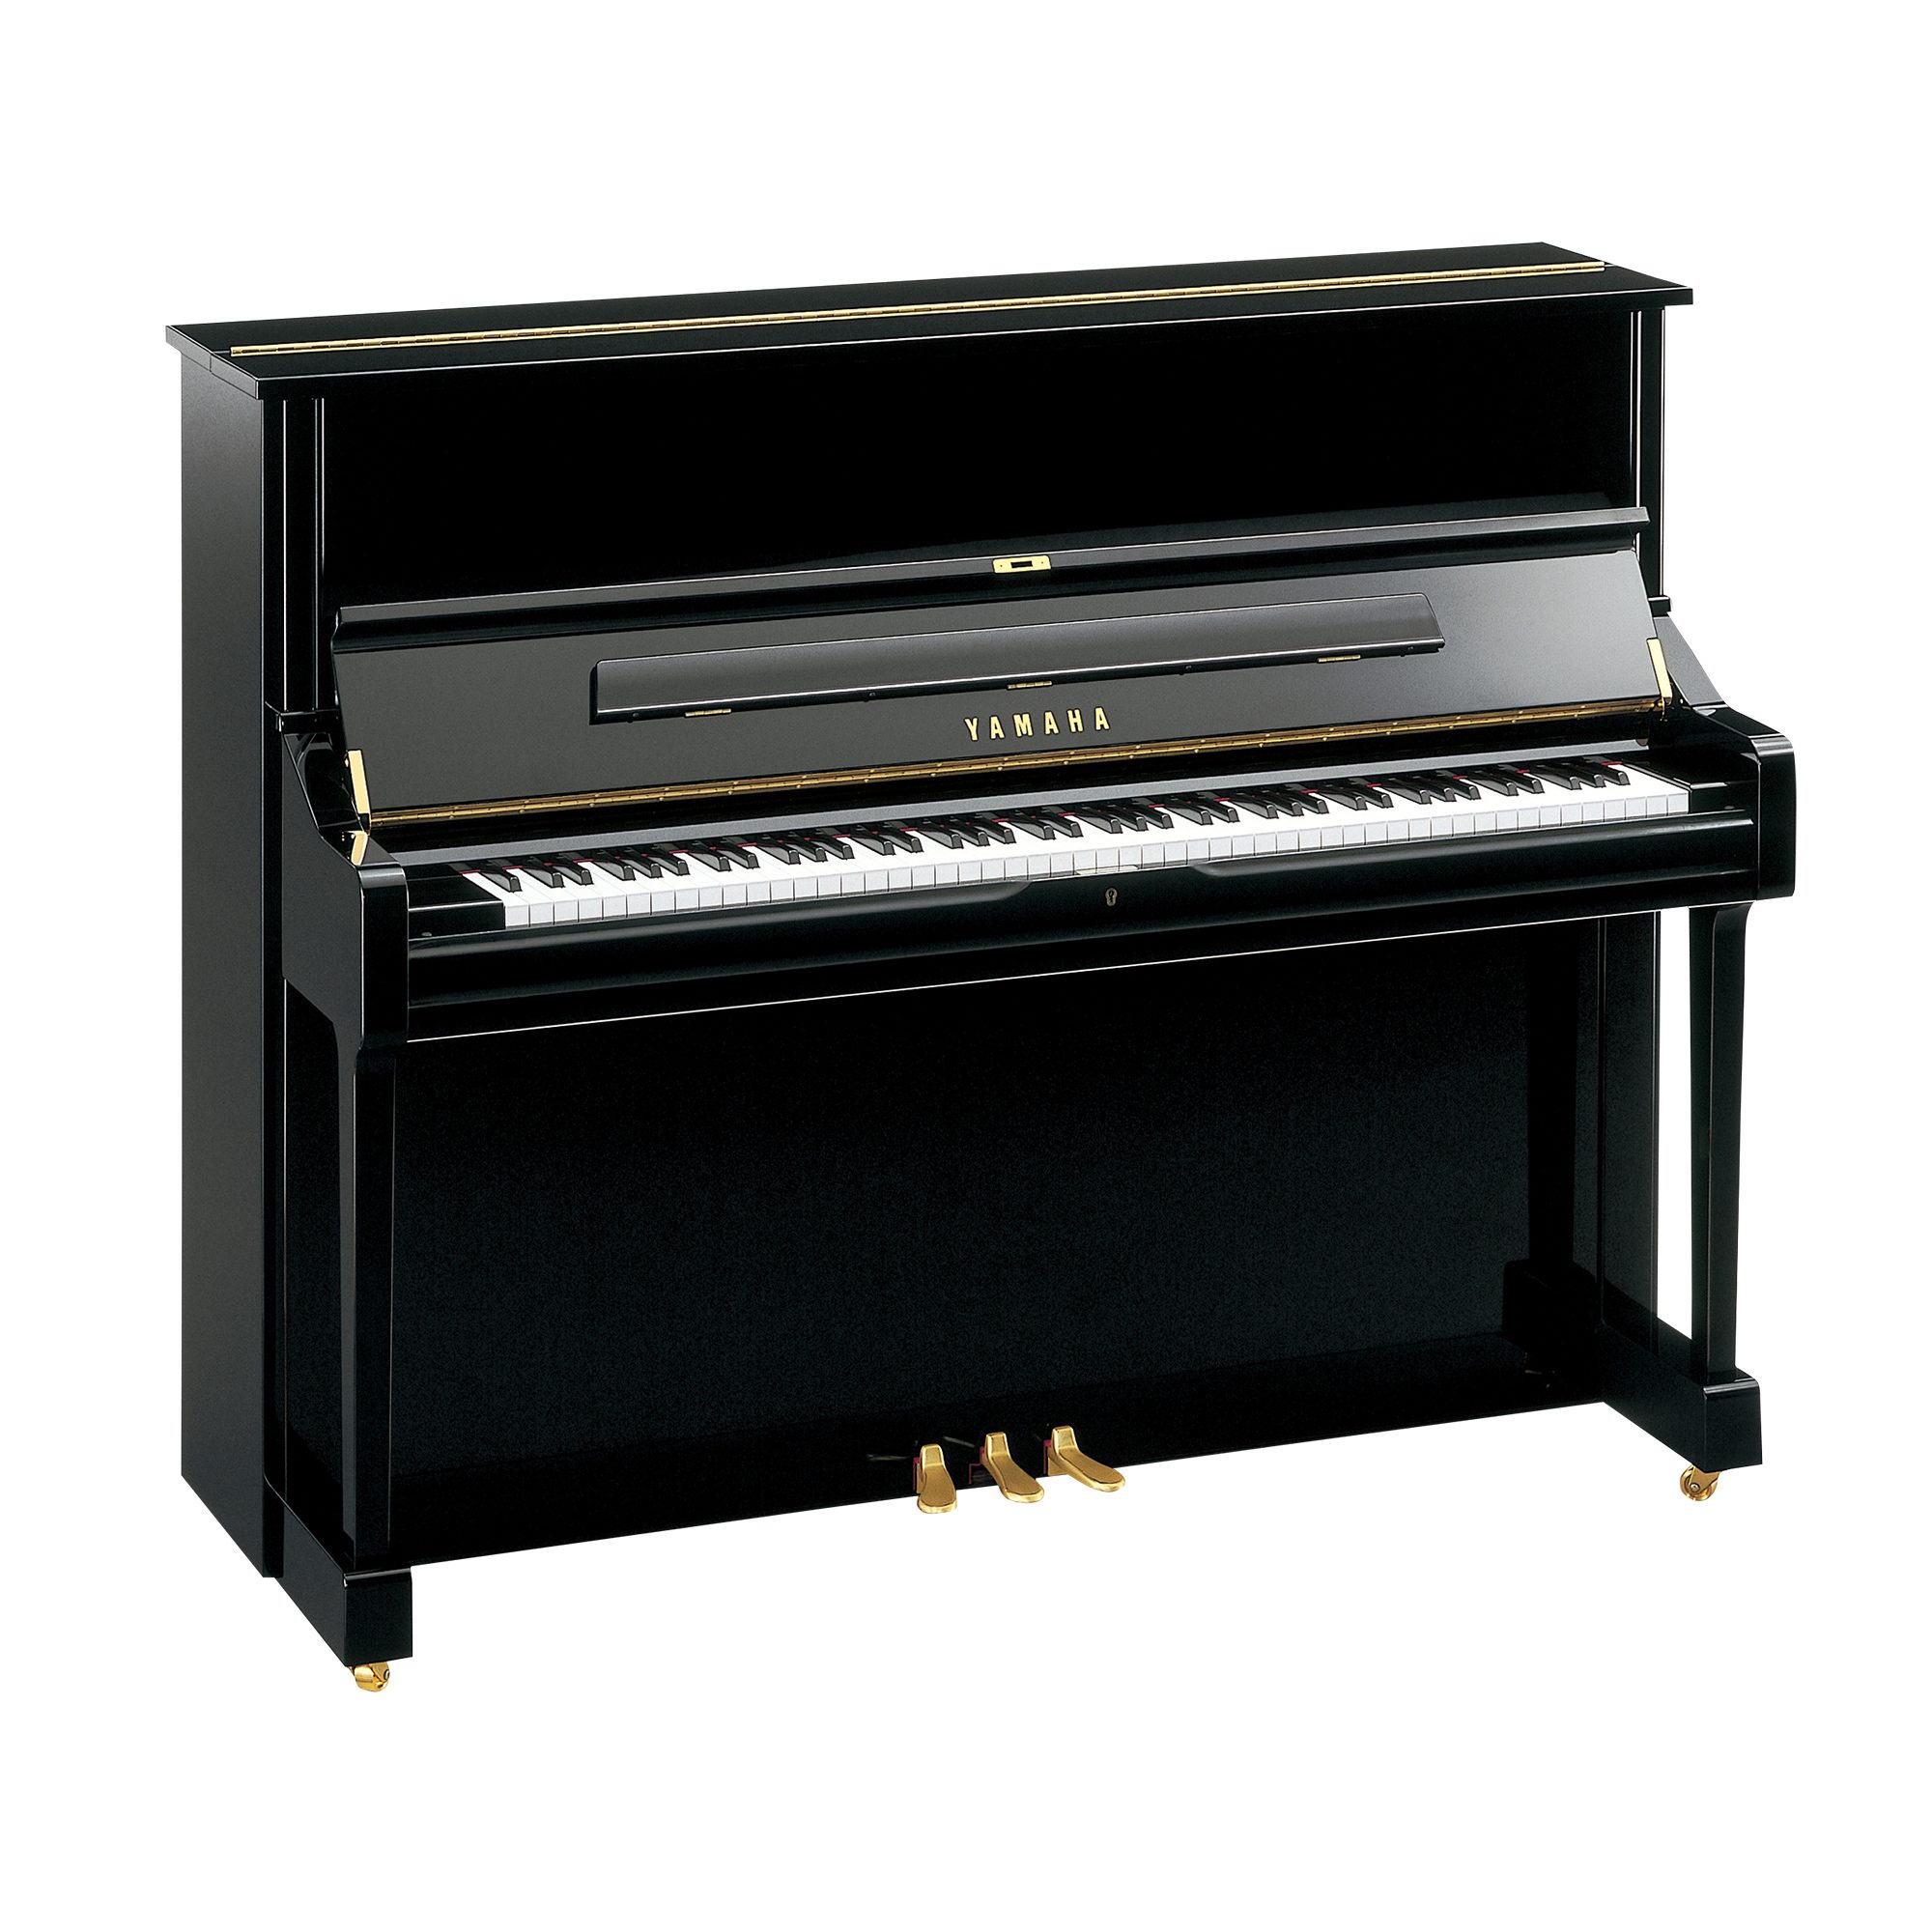 U Series - Overview - UPRIGHT PIANOS - Pianos - Musical ...